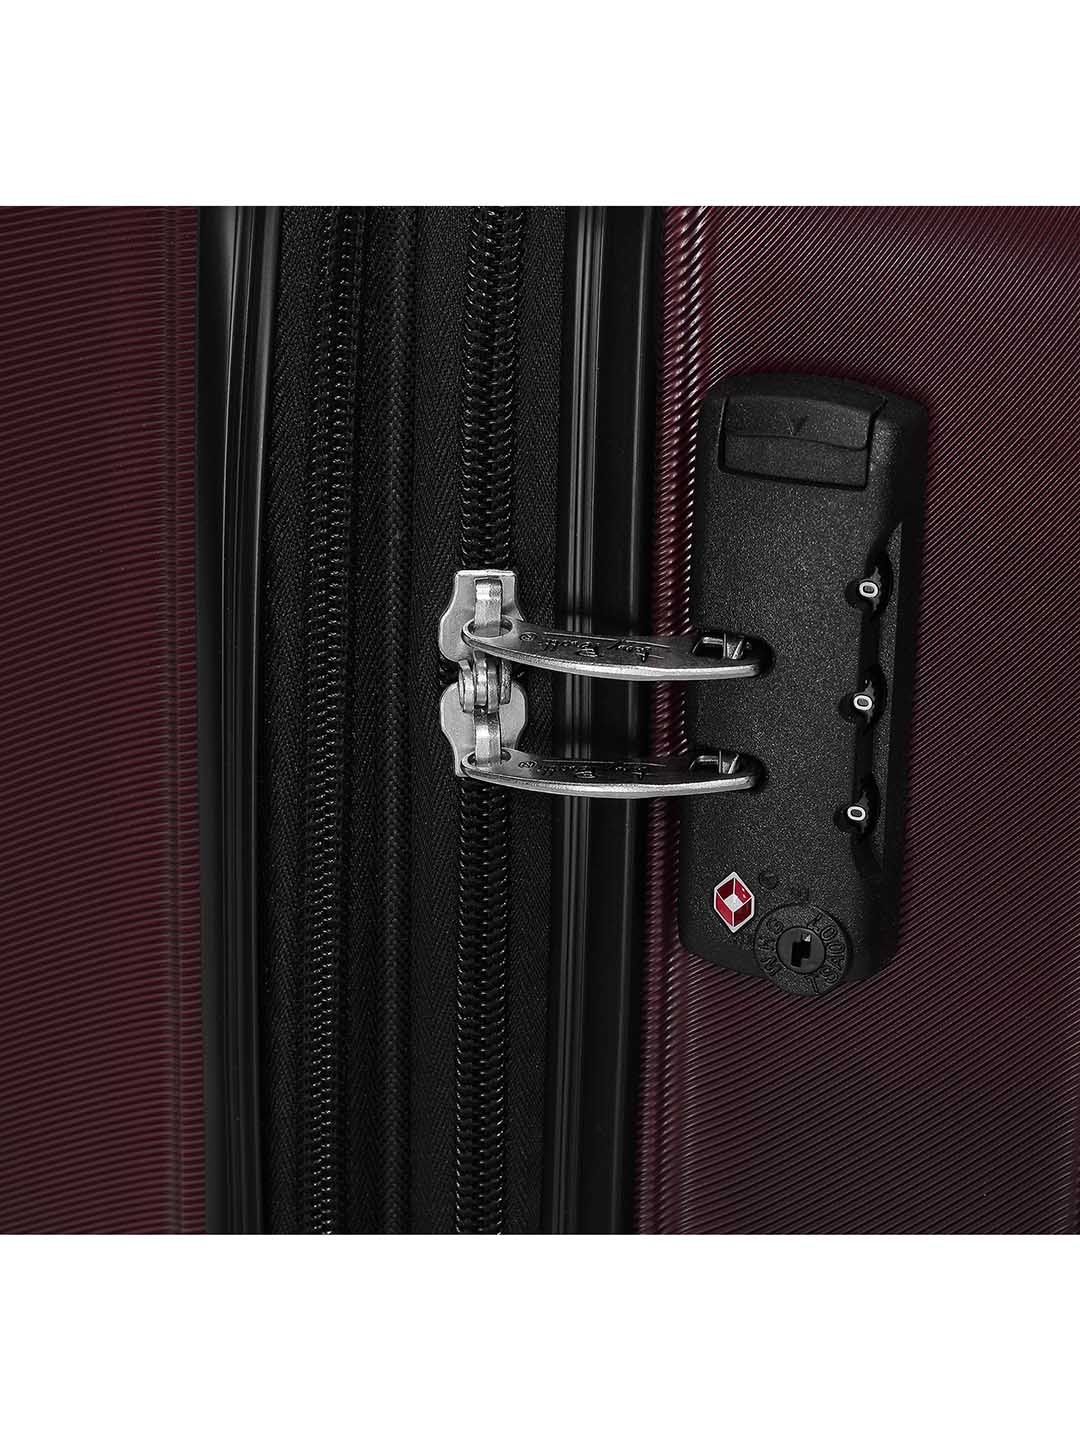 Фото Средний чемодан на колесах из рифленого ABS пластика бордового цвета Чемоданы